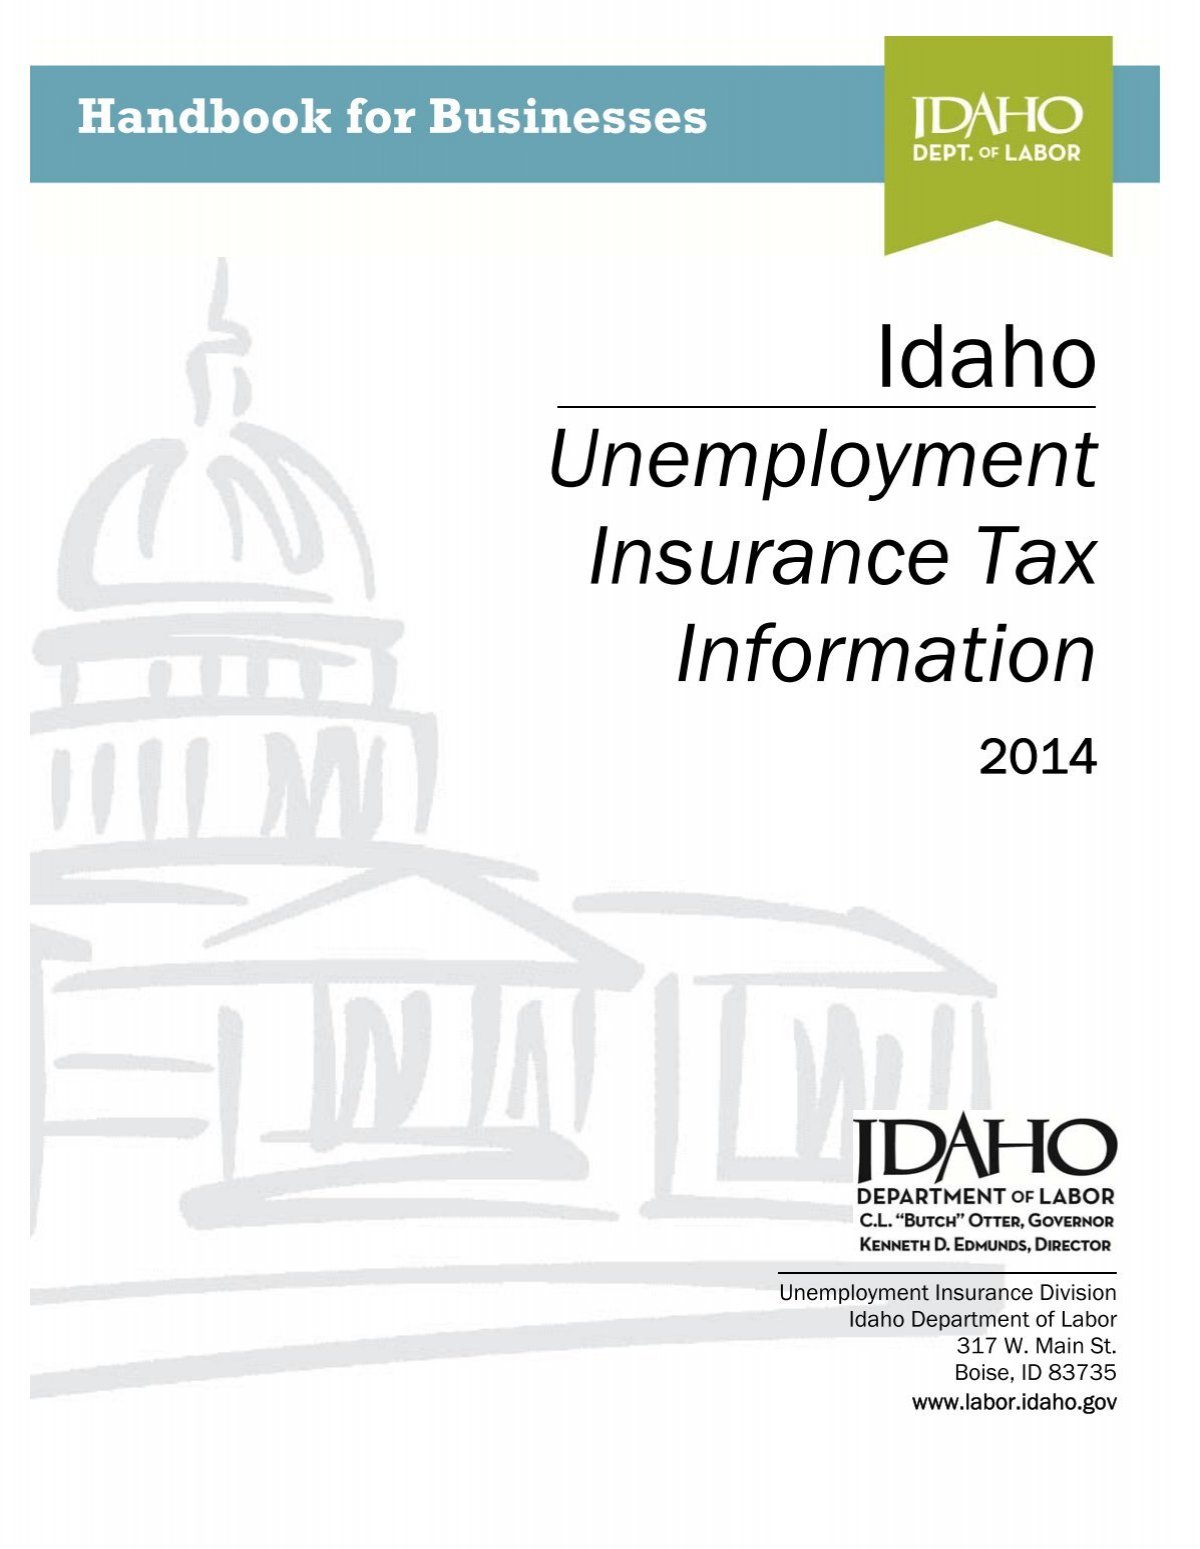 unemployment-insurance-tax-information-idaho-department-of